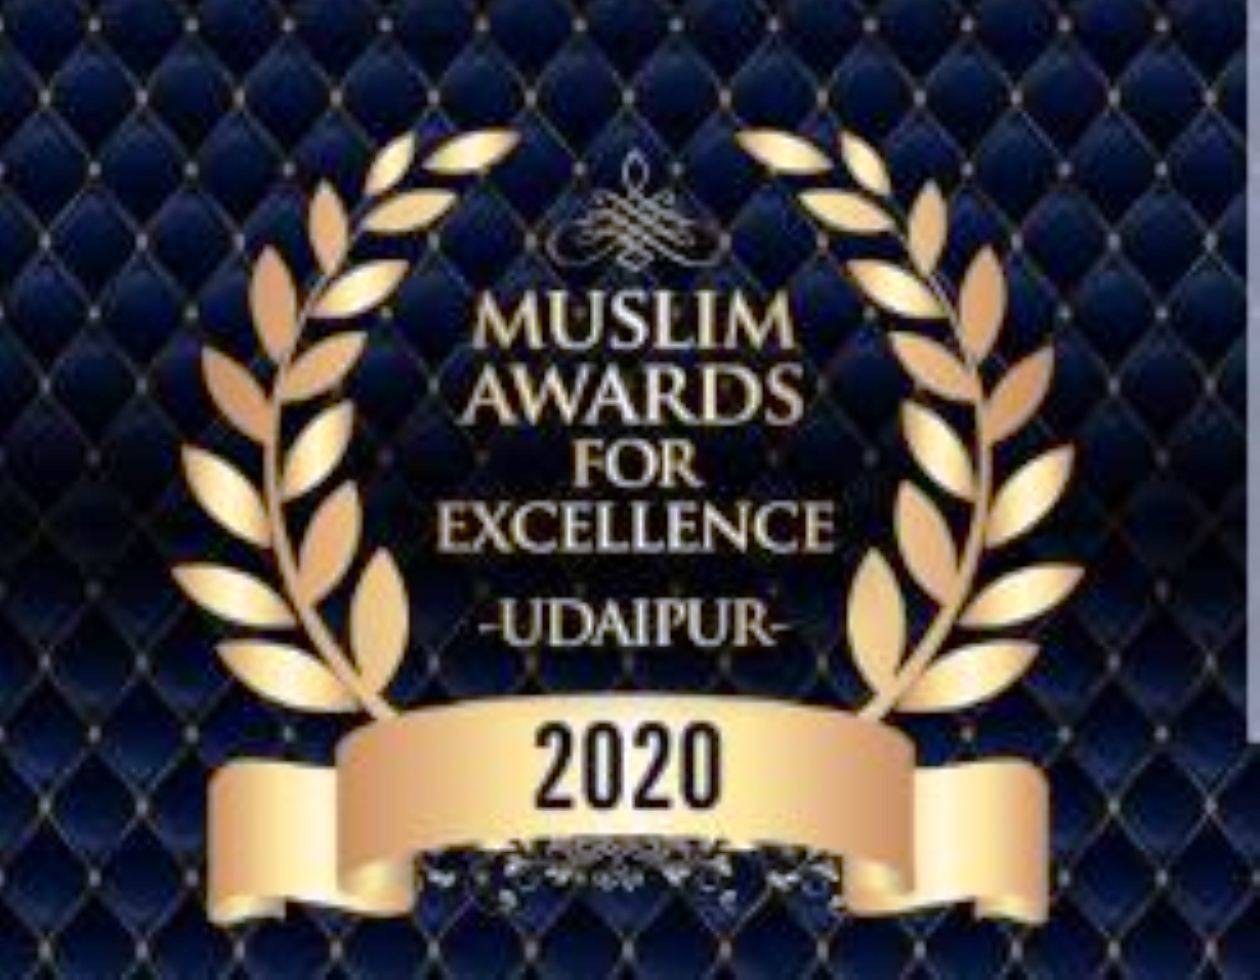 उदयपुर मुस्लिम उत्कृष्ठता पुरस्कार का आगाज